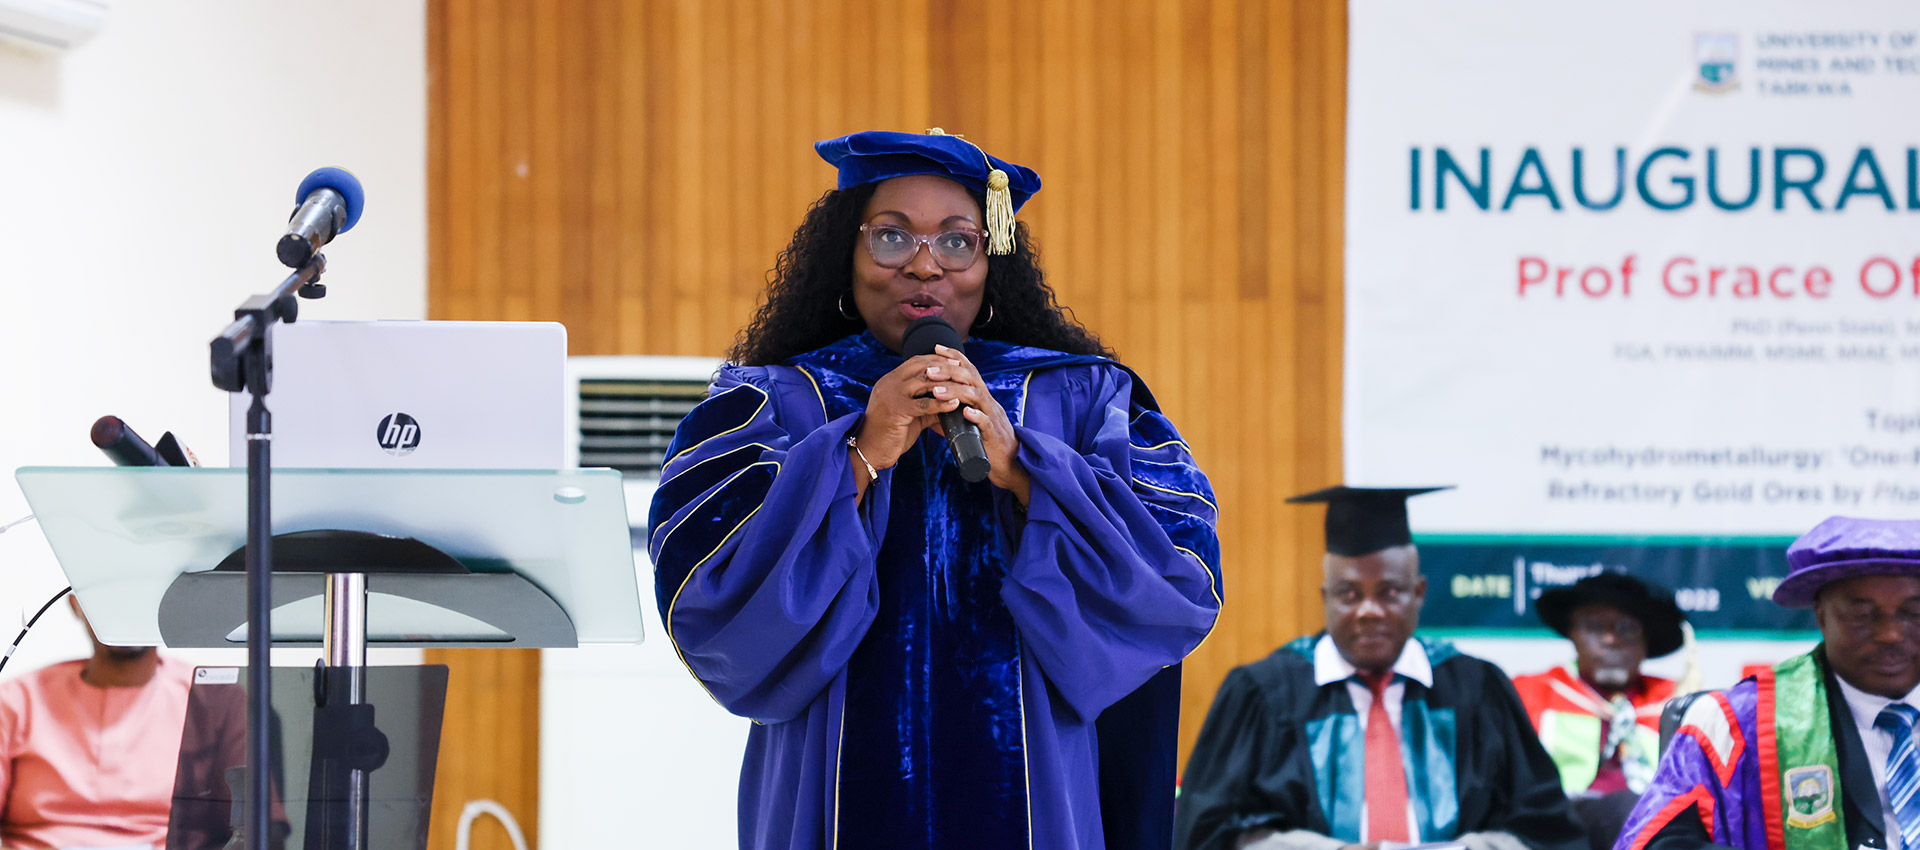 Professor Grace Ofori-Sarpong